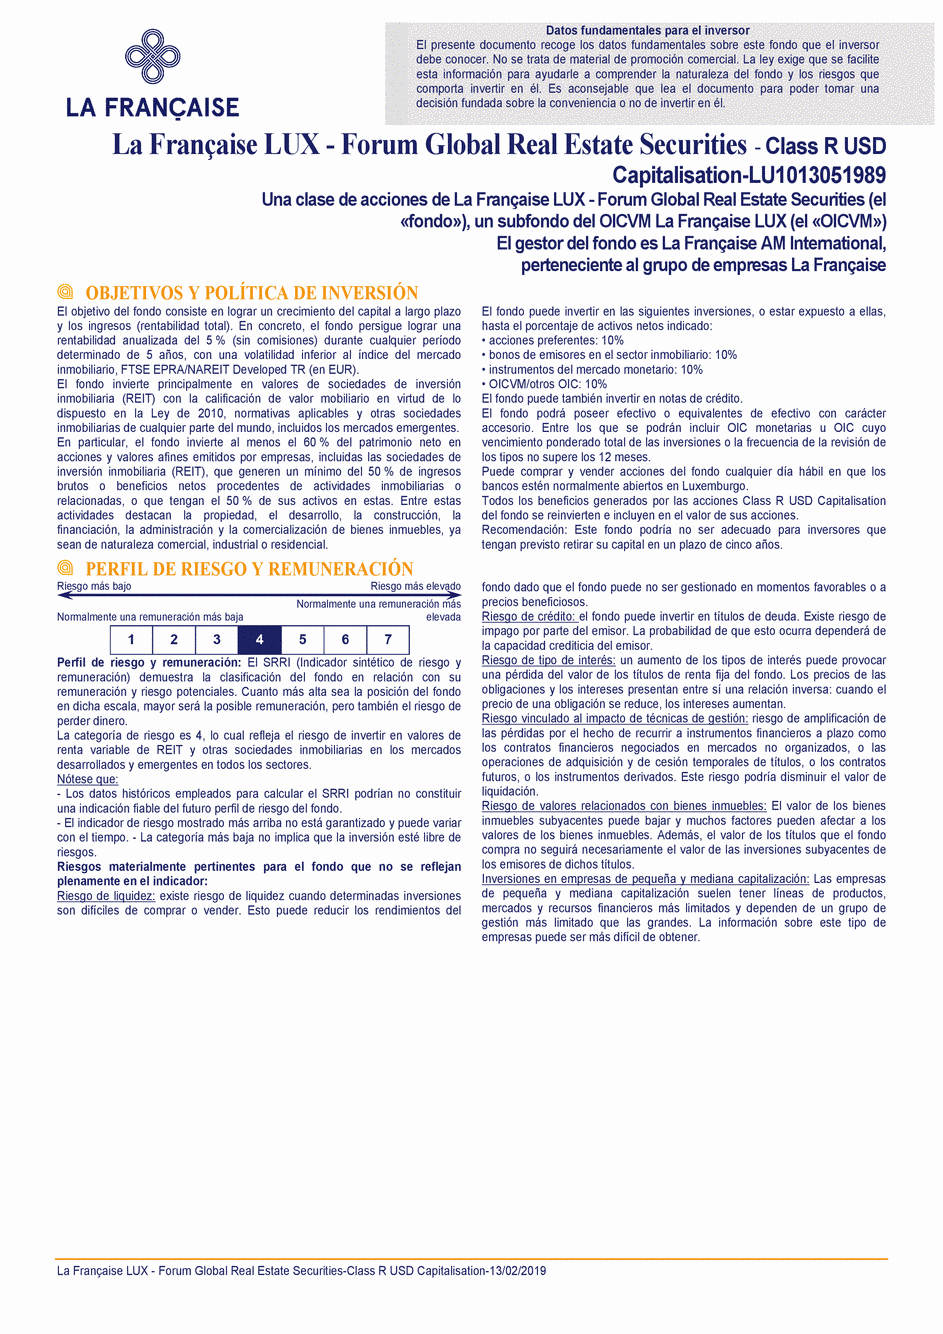 DICI La Française LUX - Forum Global Real Estate Securities - R (C) USD - 13/02/2019 - Spanish